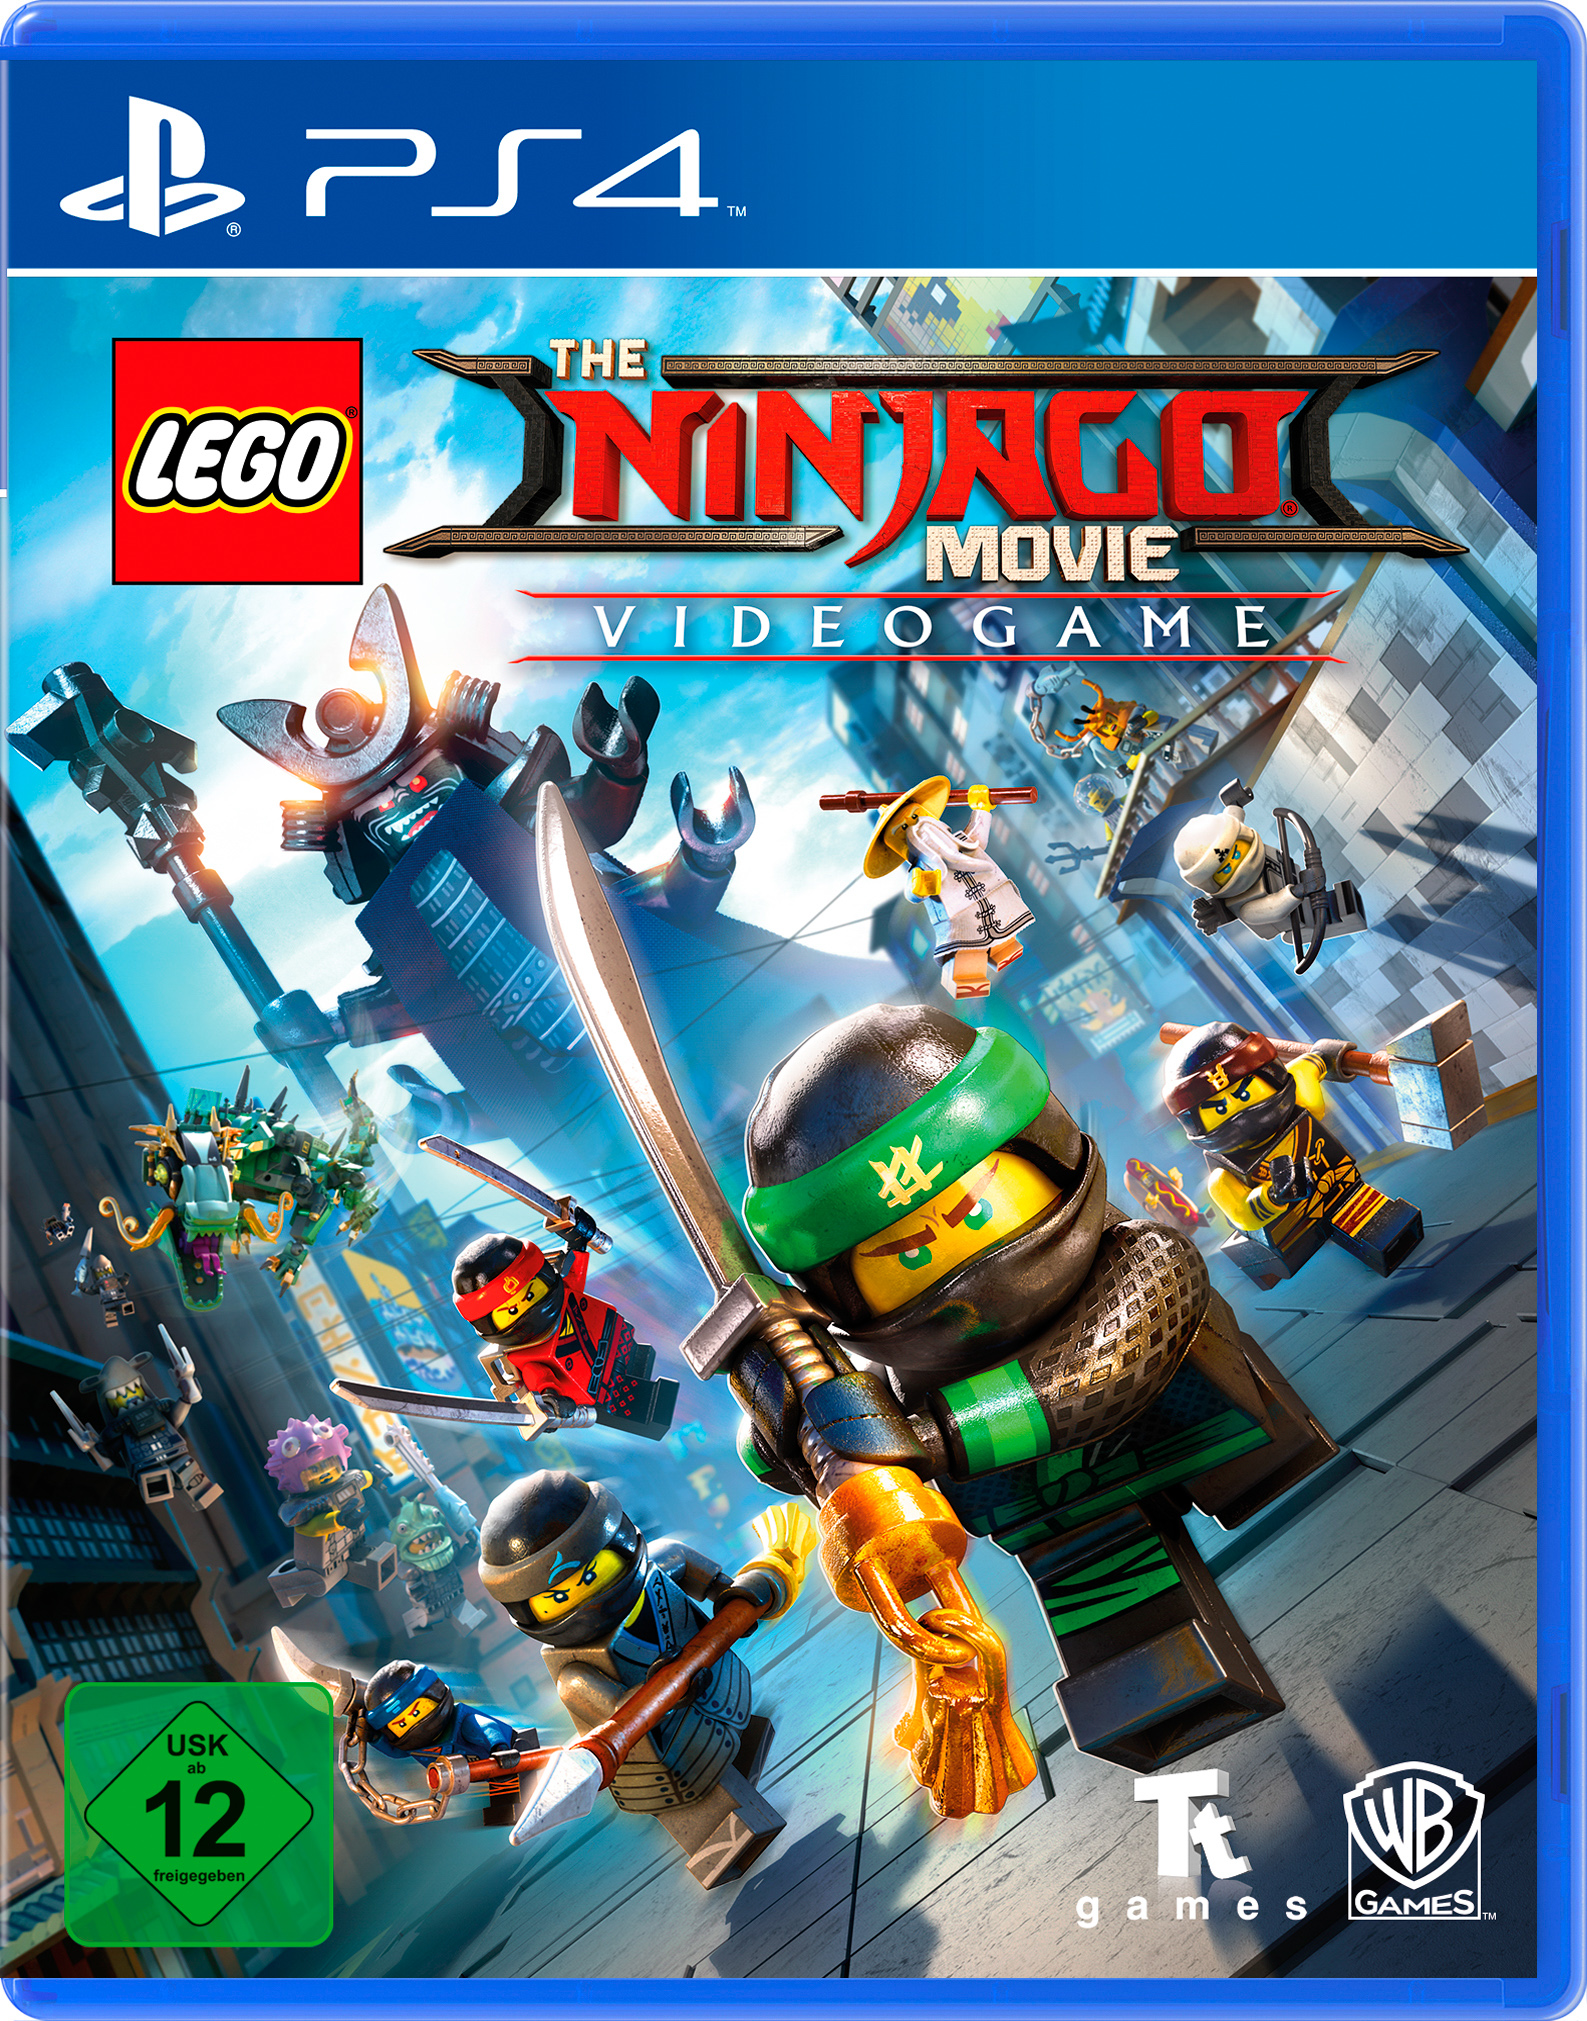 Lego Ninjago Movie PS-4 [PlayStation The 4] Budget Video Game 